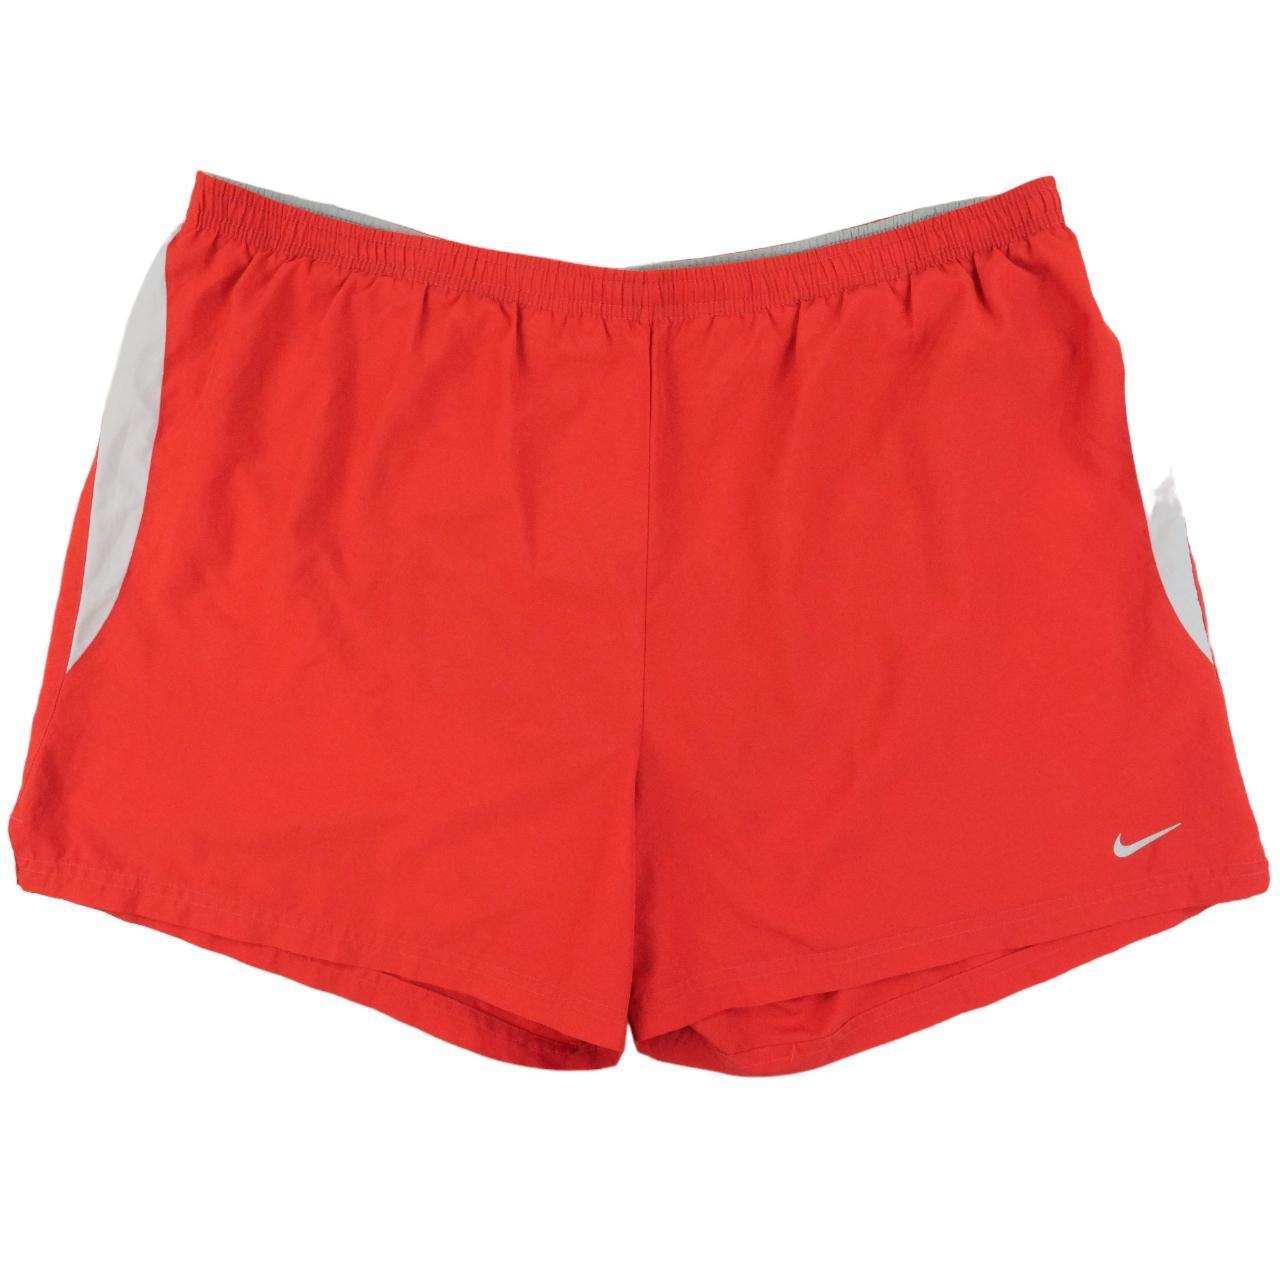 Vintage Nike Shorts Size W36 - Known Source